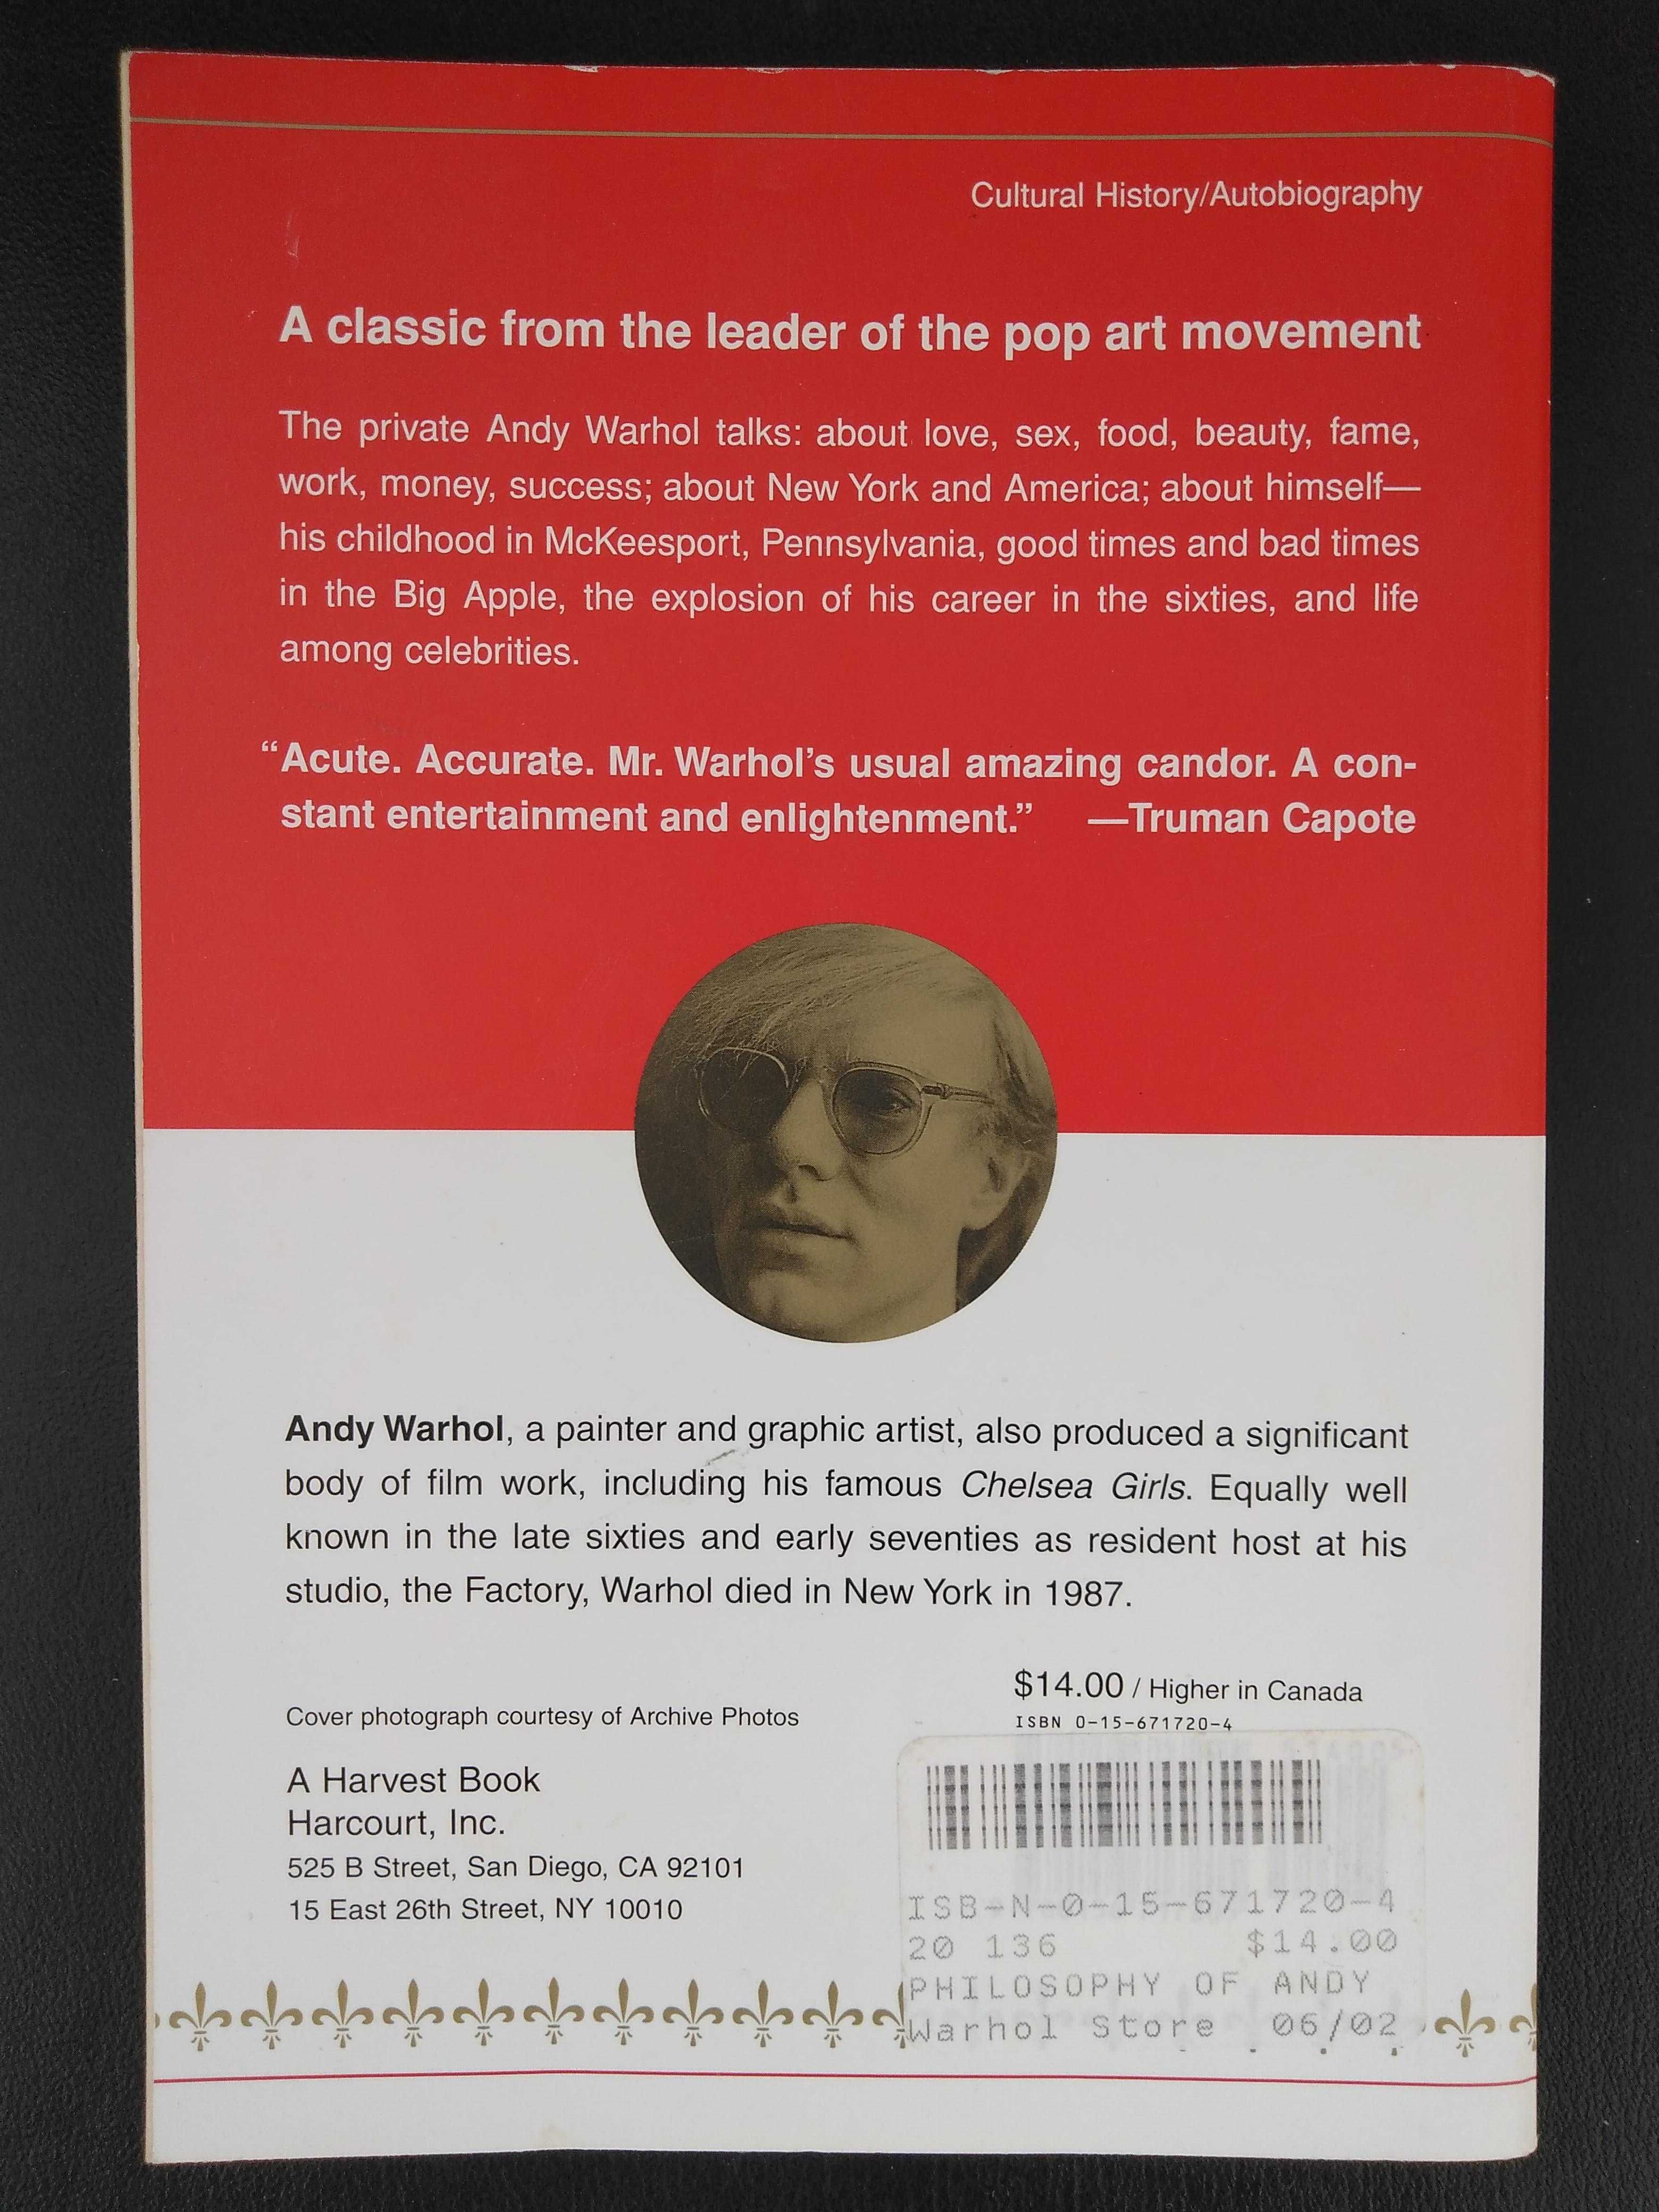 Livro "The philosophy of Andy Warhol", de Andy Warhol